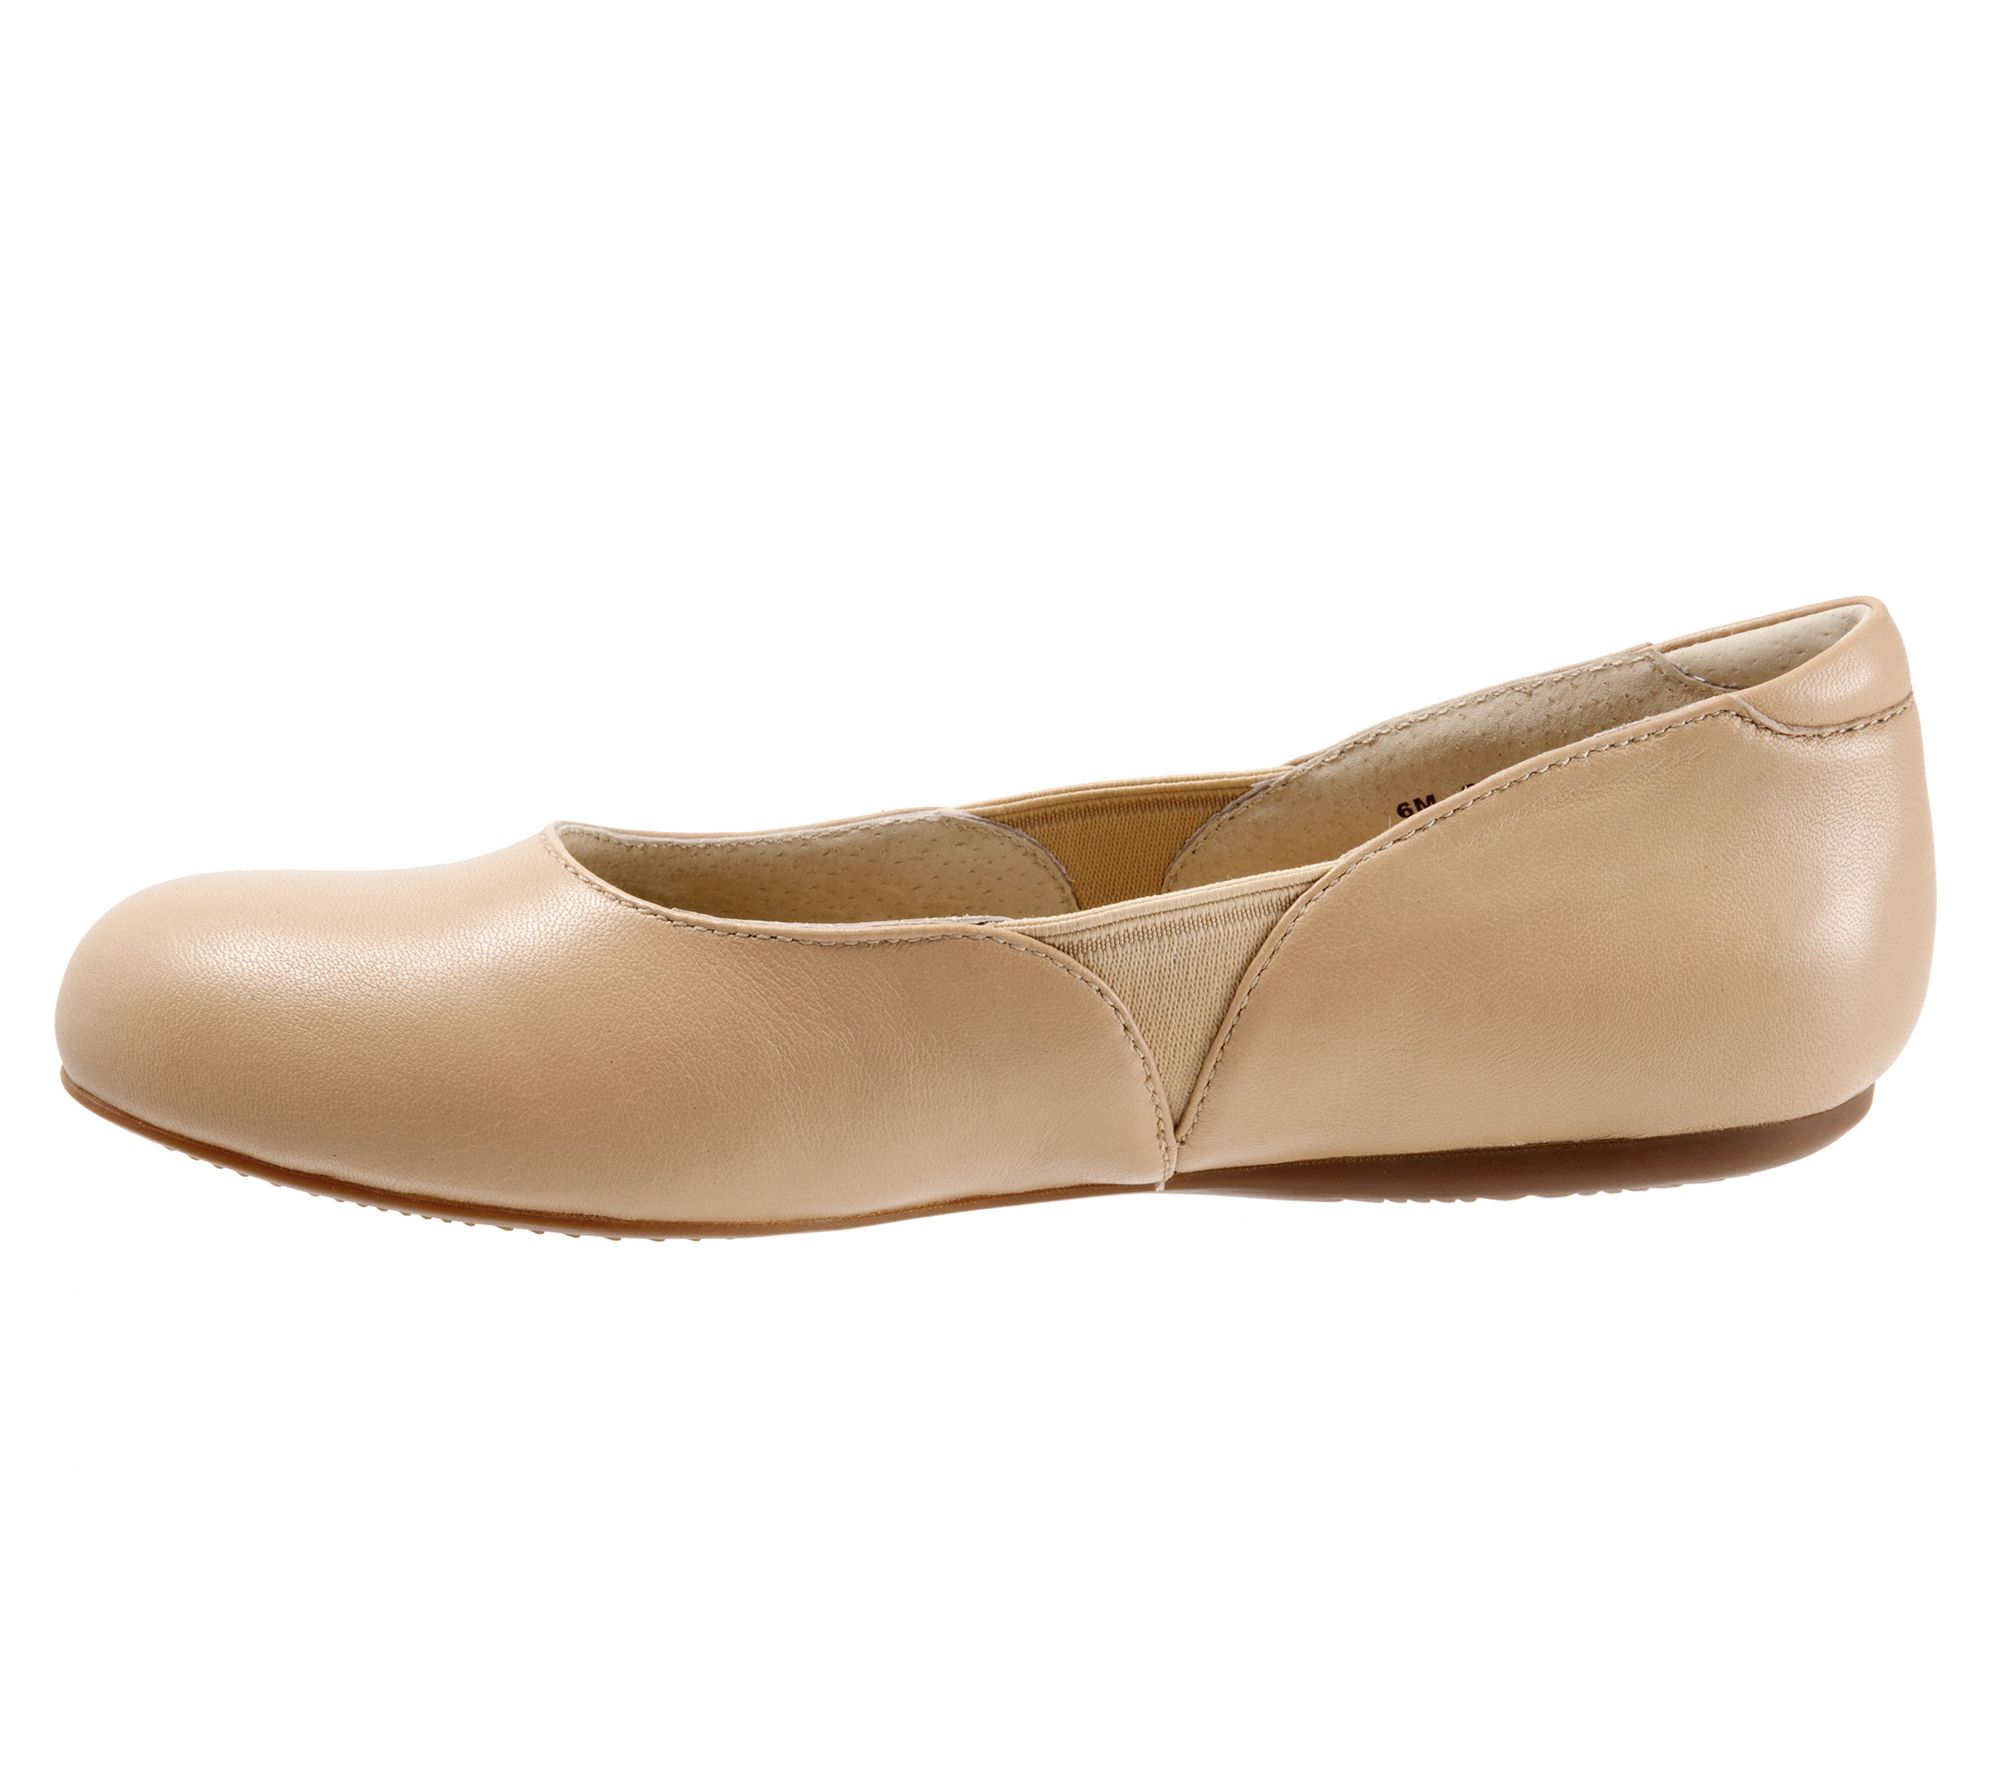 SoftWalk Classic Leather Ballet Flats - Norwich - QVC.com